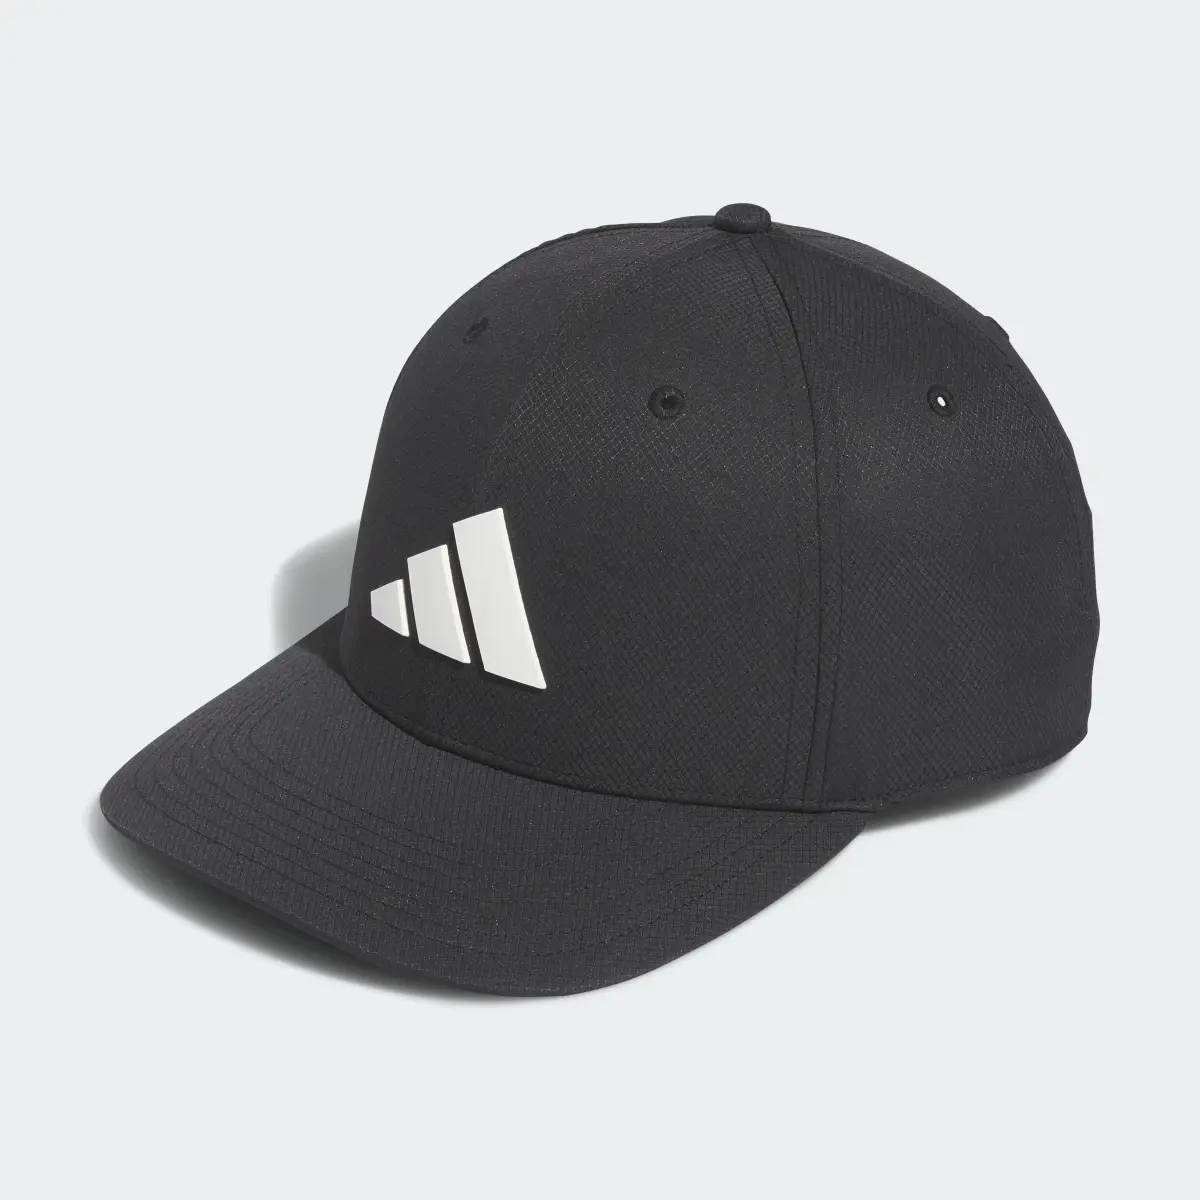 Adidas Tour Snapback Golf Hat. 2